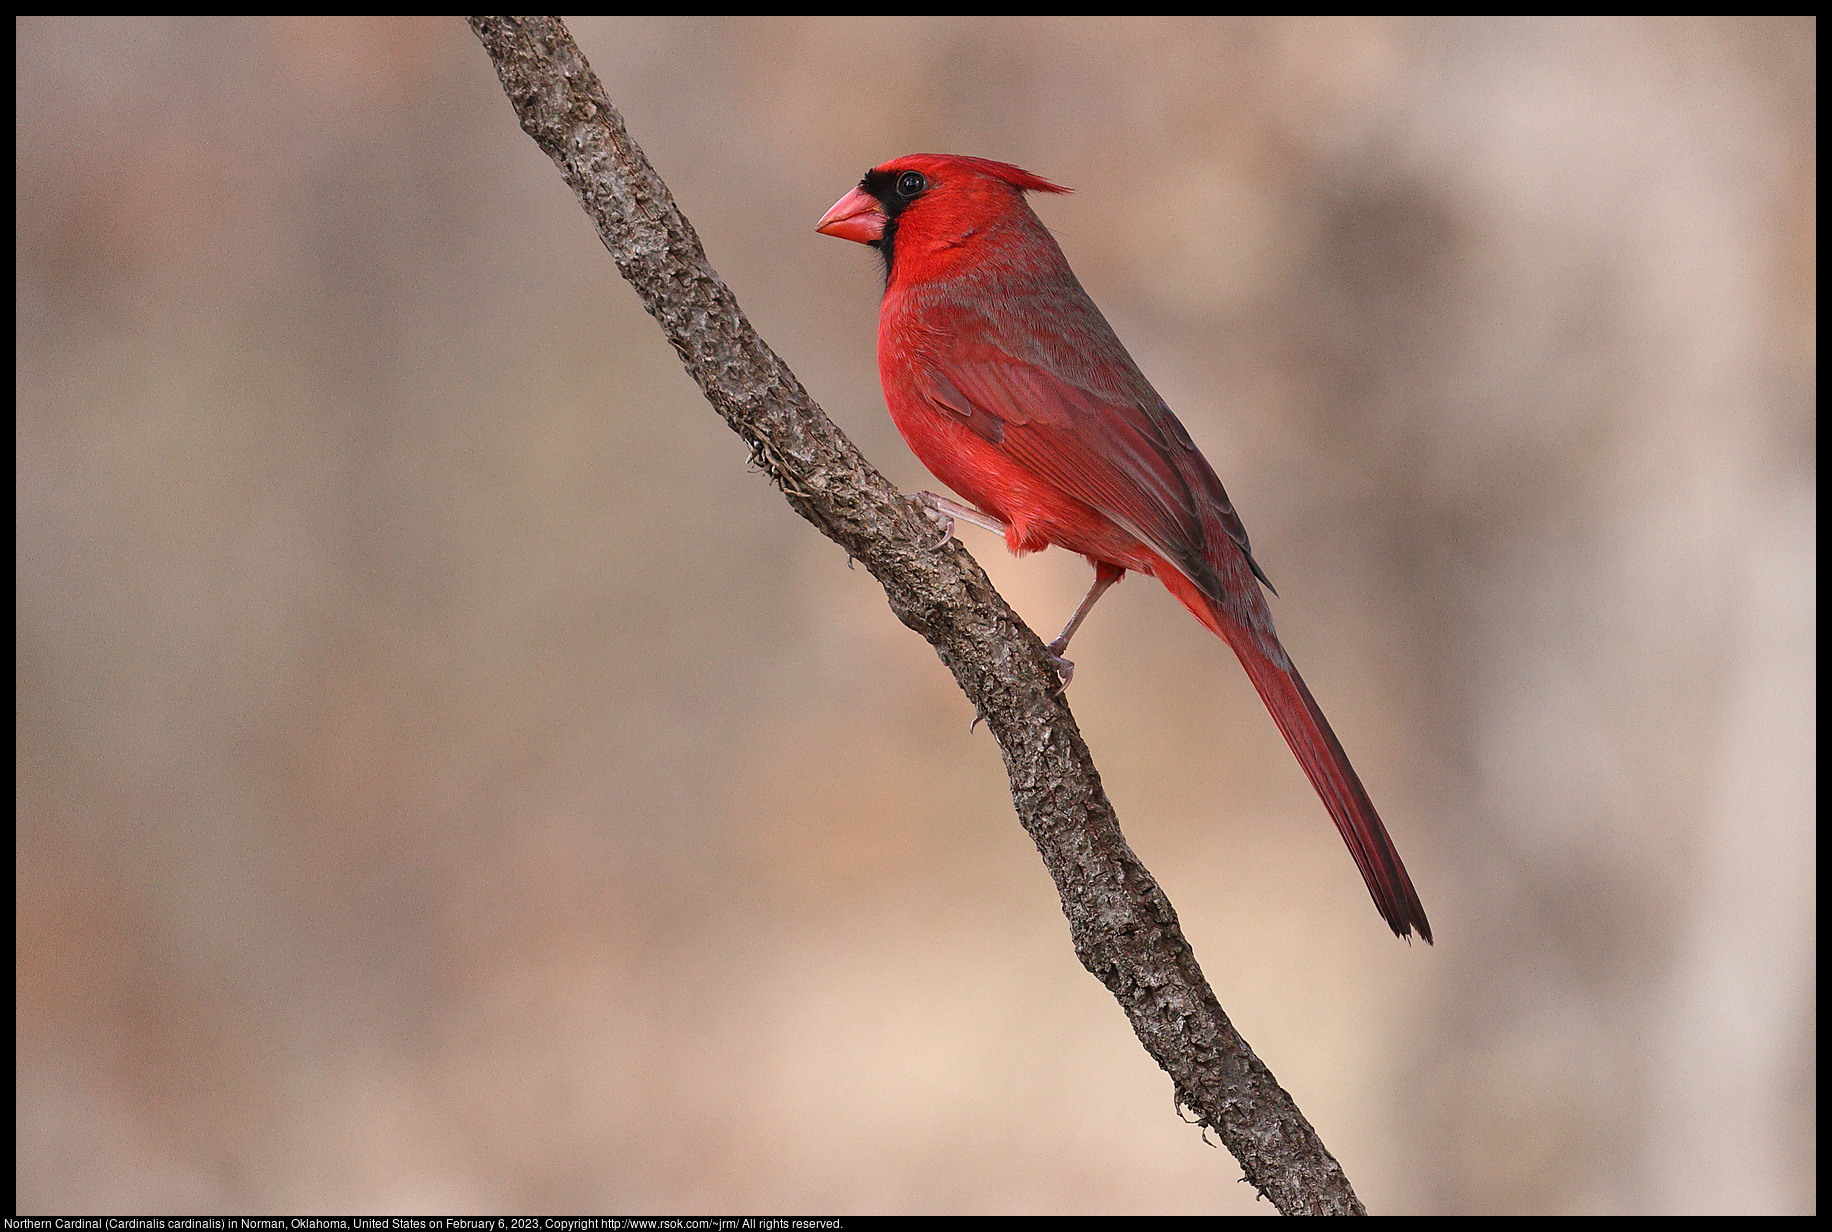 Northern Cardinal (Cardinalis cardinalis) in Norman, Oklahoma, United States on February 6, 2023